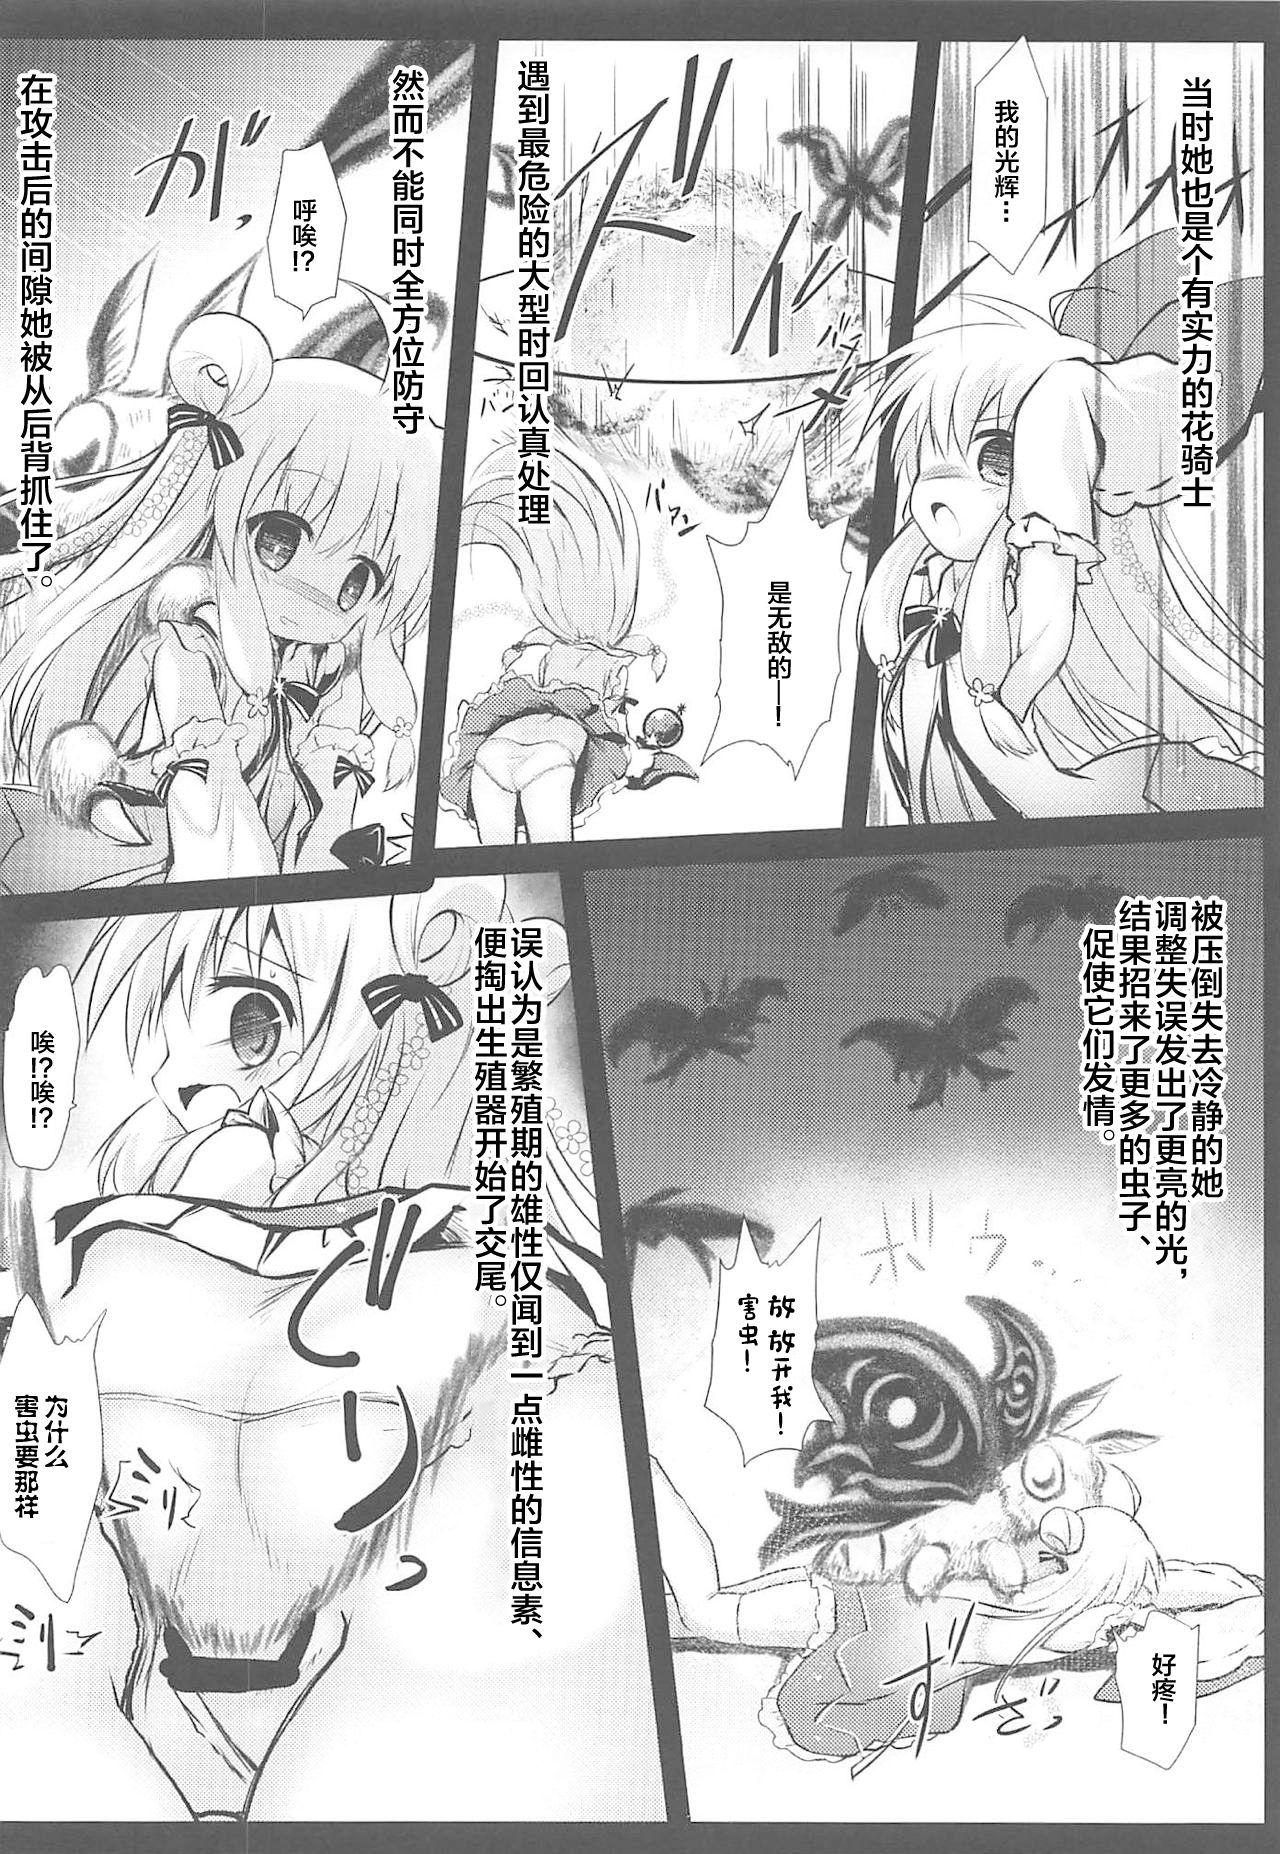 Parody Gaichuu Higai Houkokusho File 3 - Flower knight girl Ikillitts - Page 6